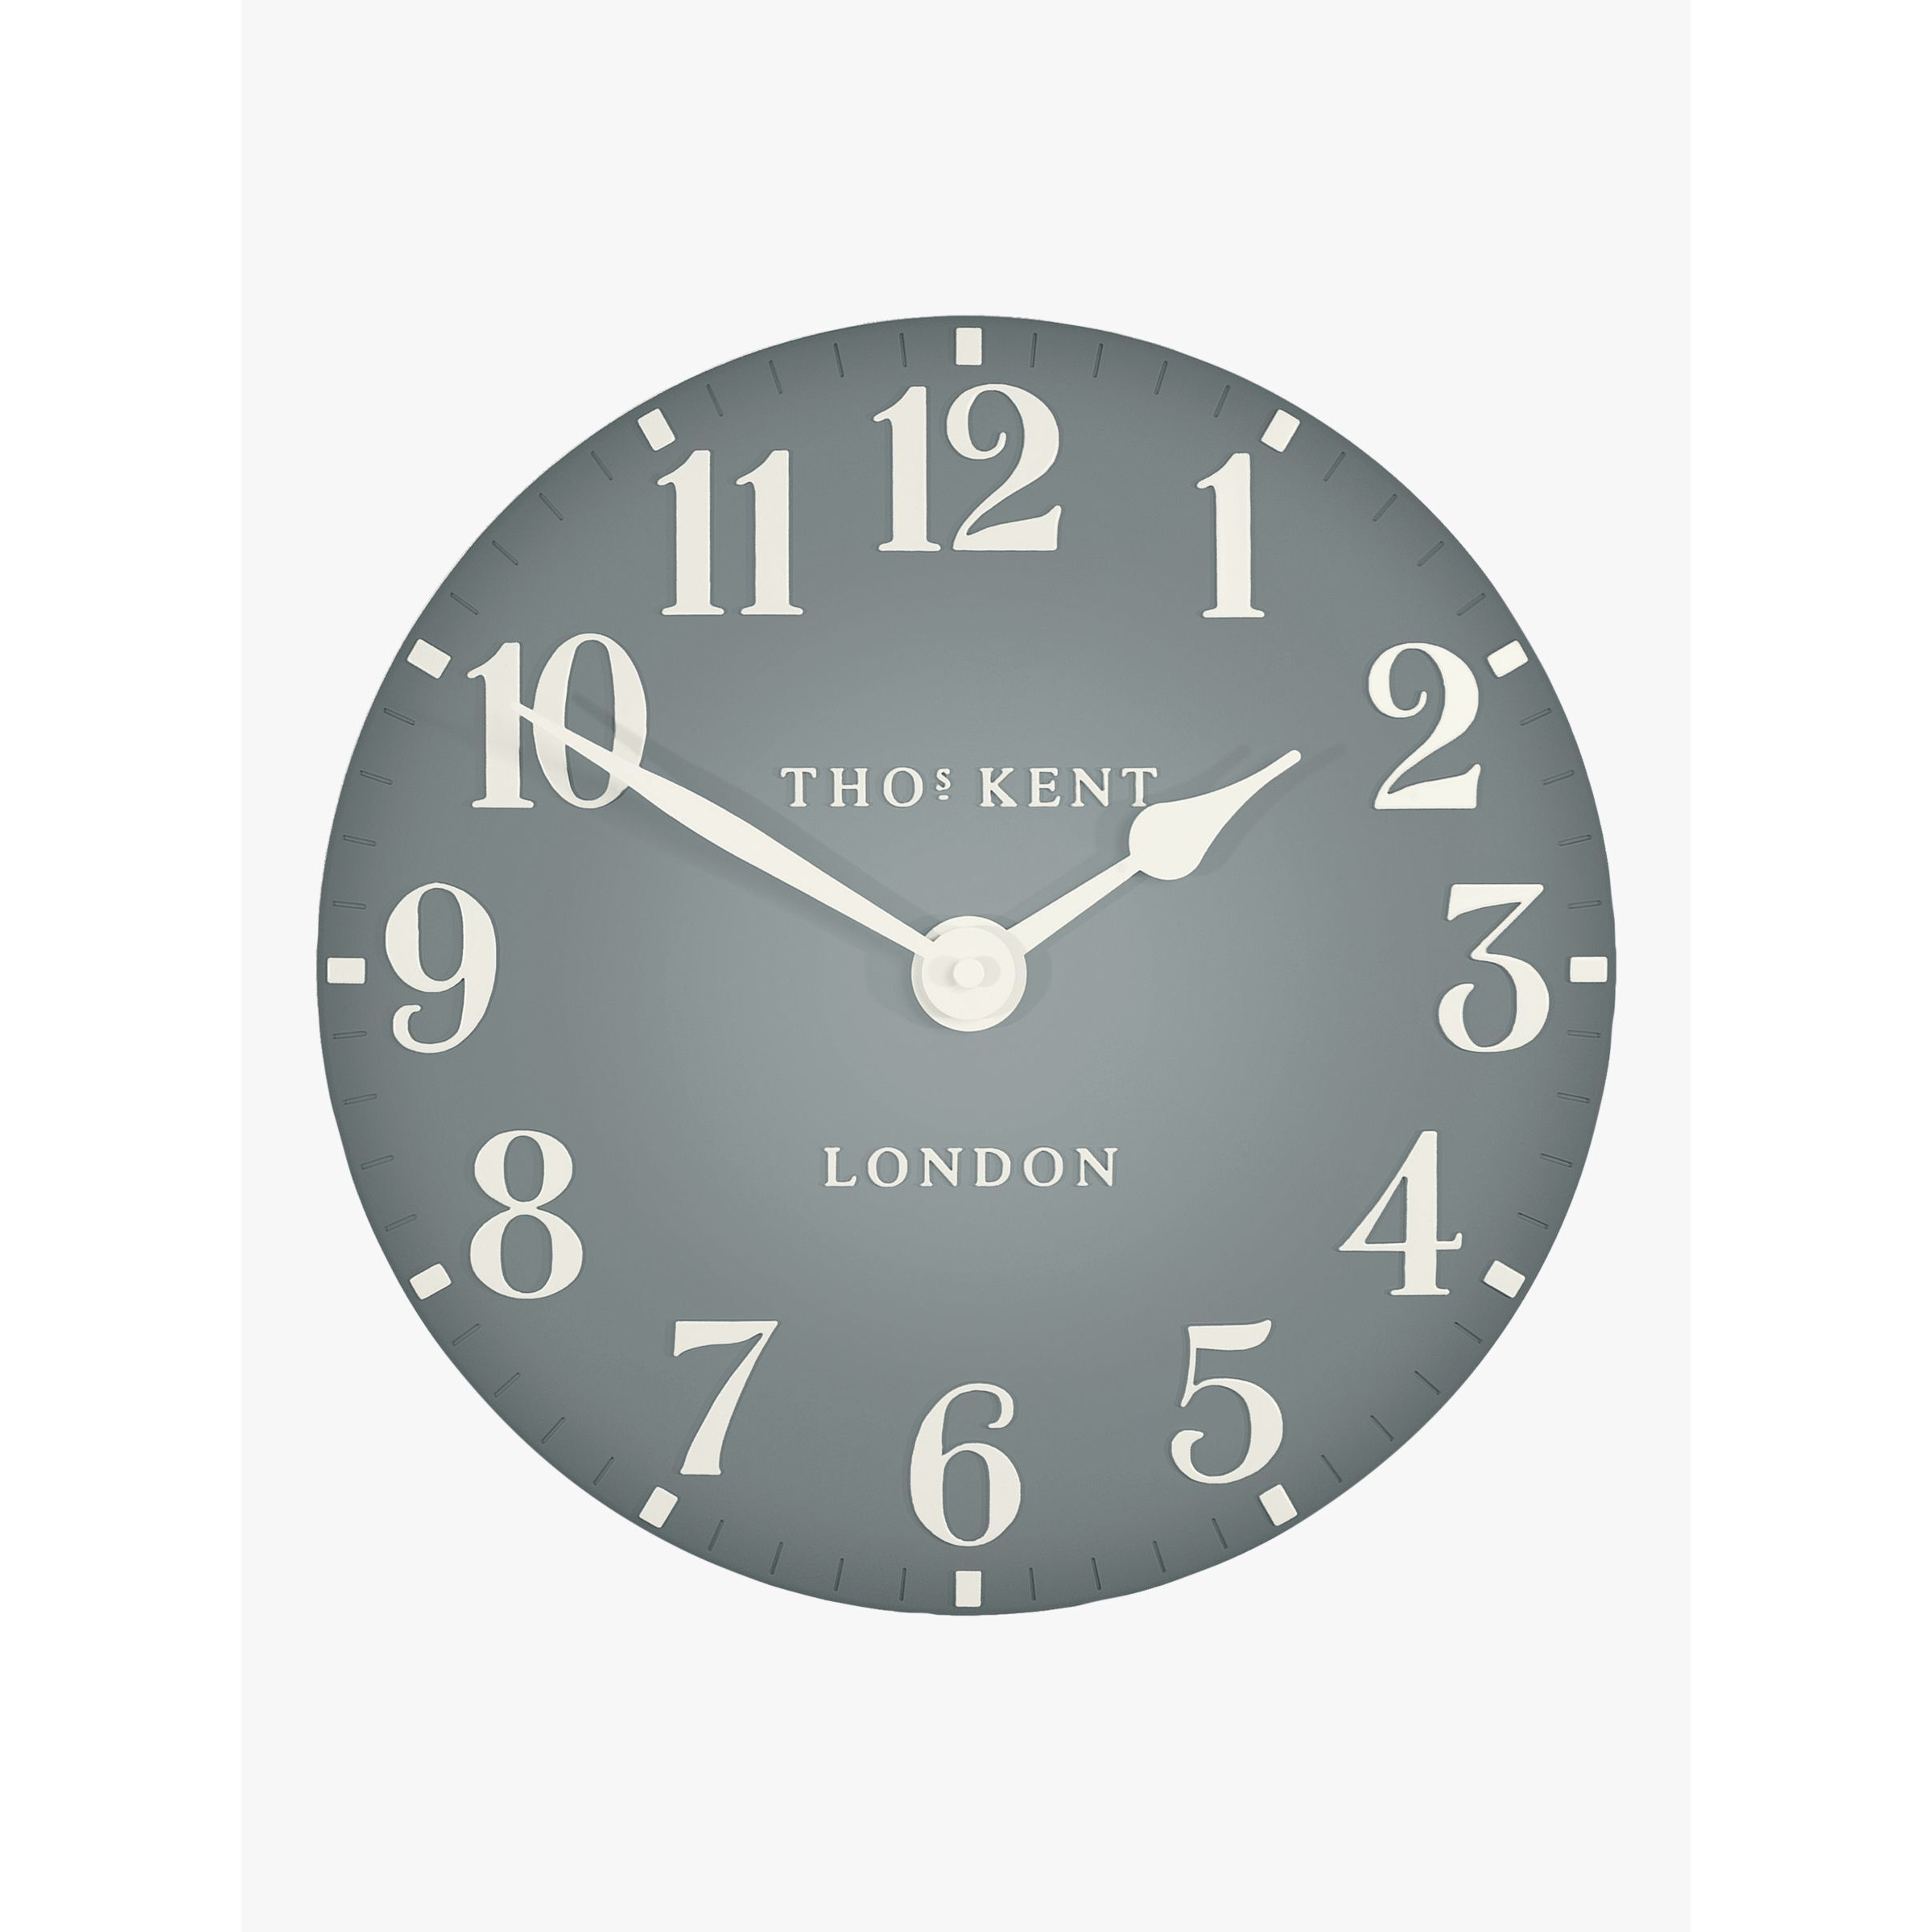 Thomas Kent Arabic Numerals Wall Clock - image 1